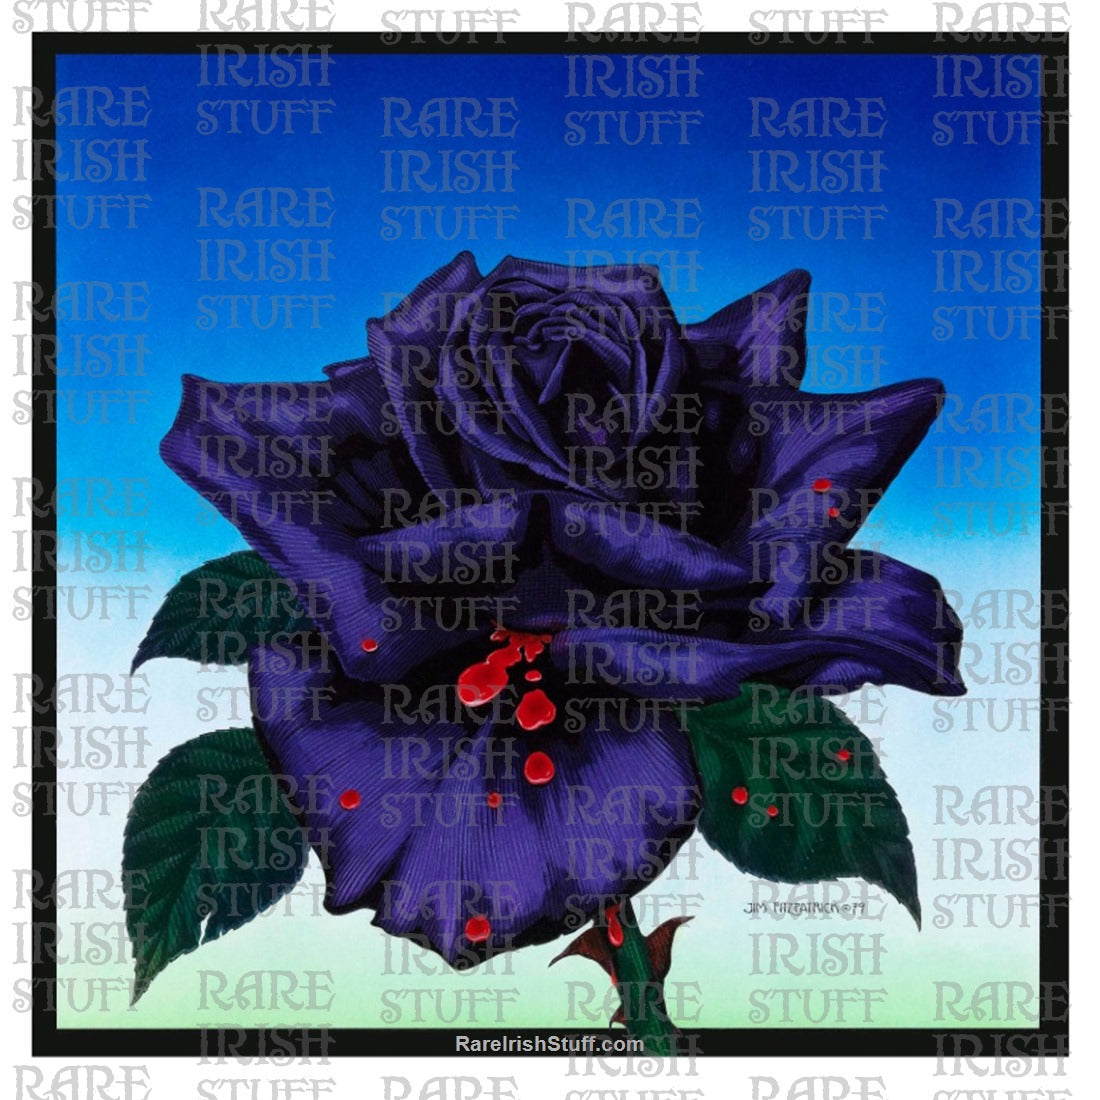 Black Rose album cover by artist Jim Fitzpatrick 1979